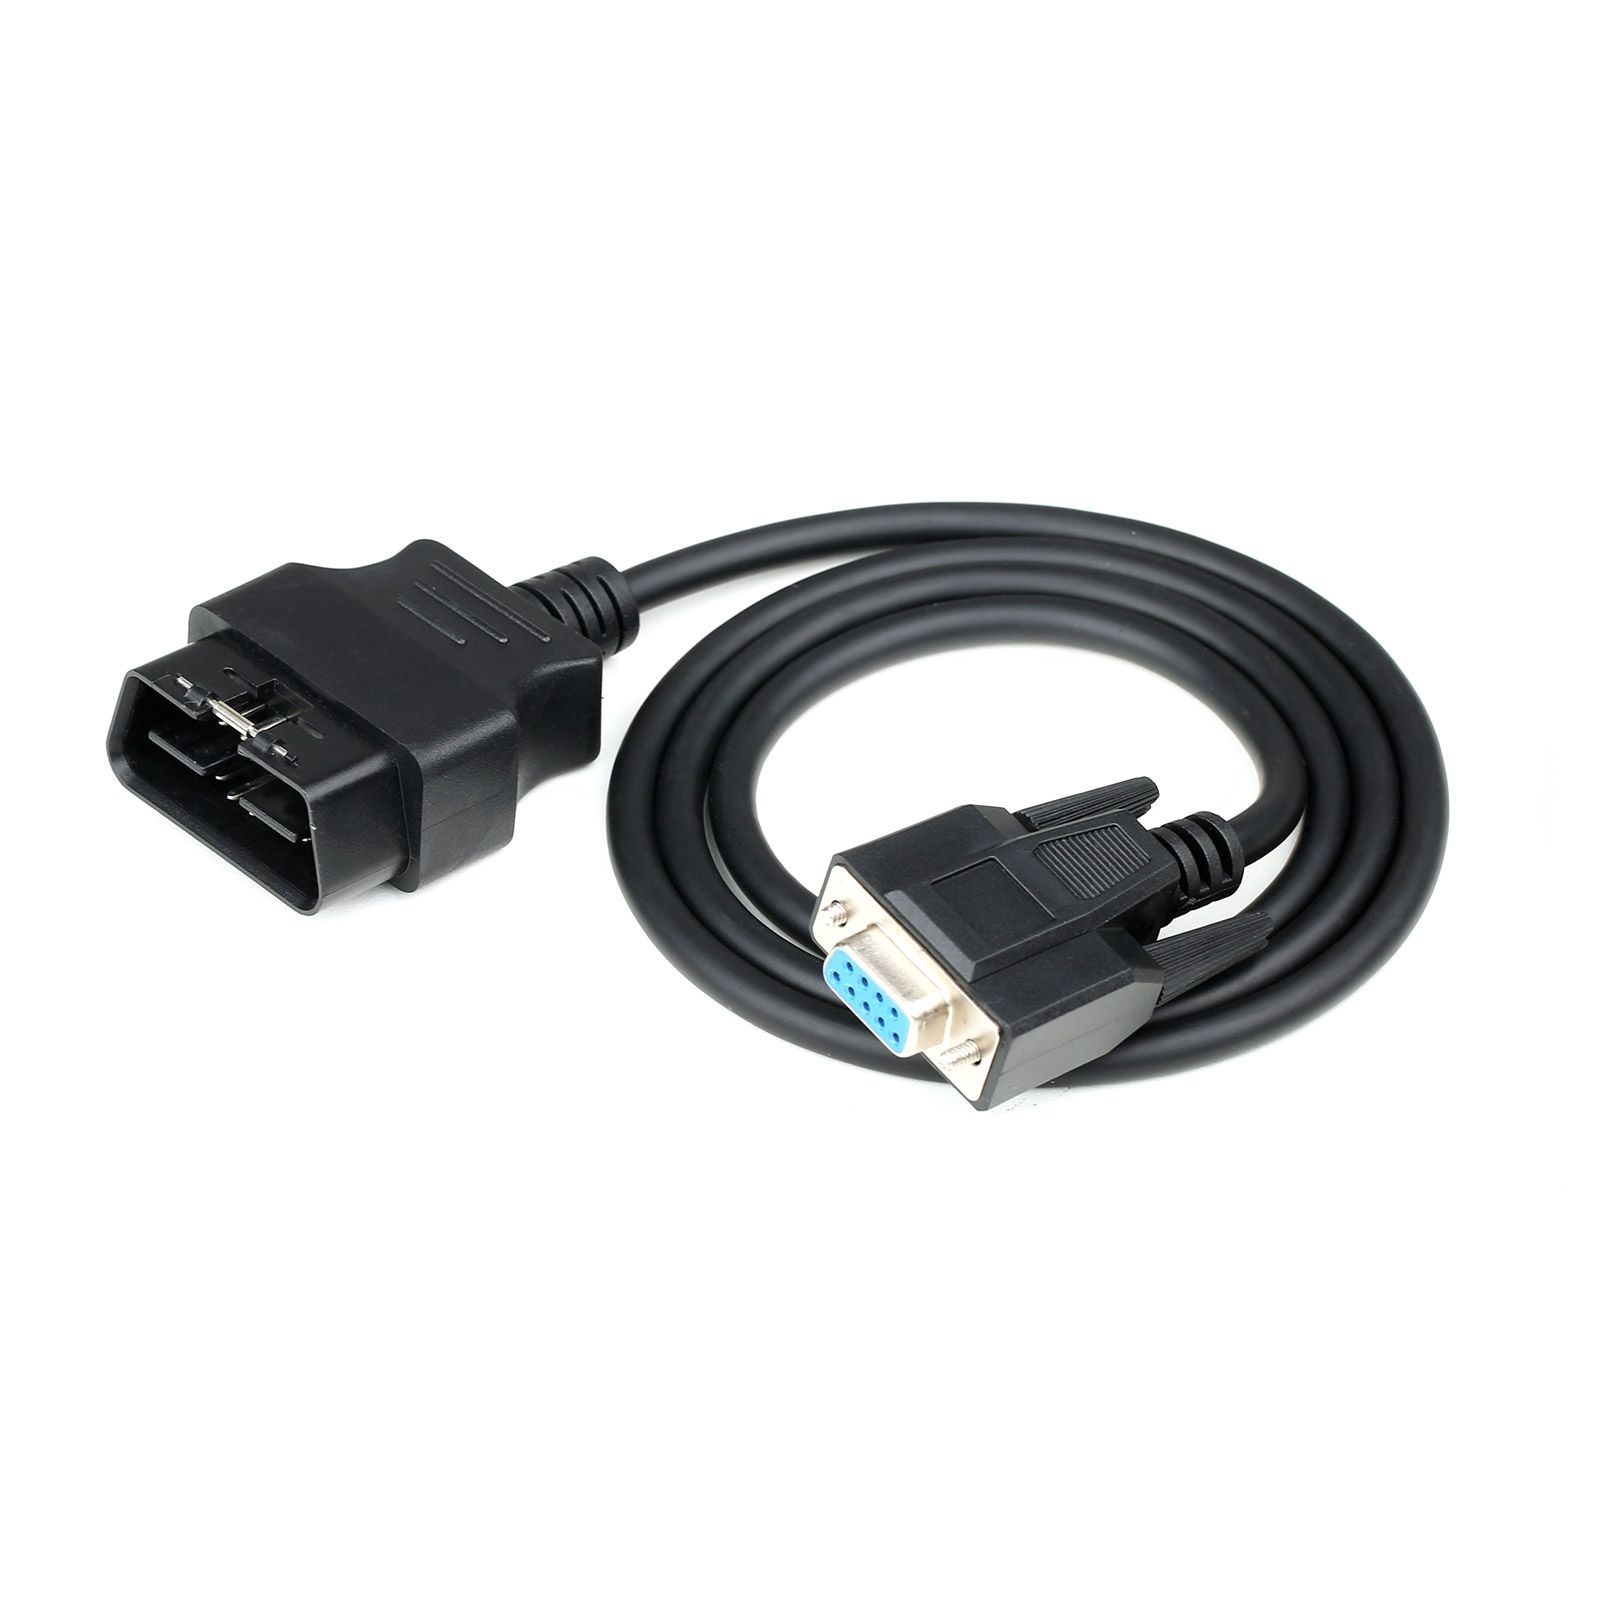 Equipamento de teste automotivo da rede do CAN do USB V-CAN3 que conecta o PC e a rede do CAN auto alimentado do USB